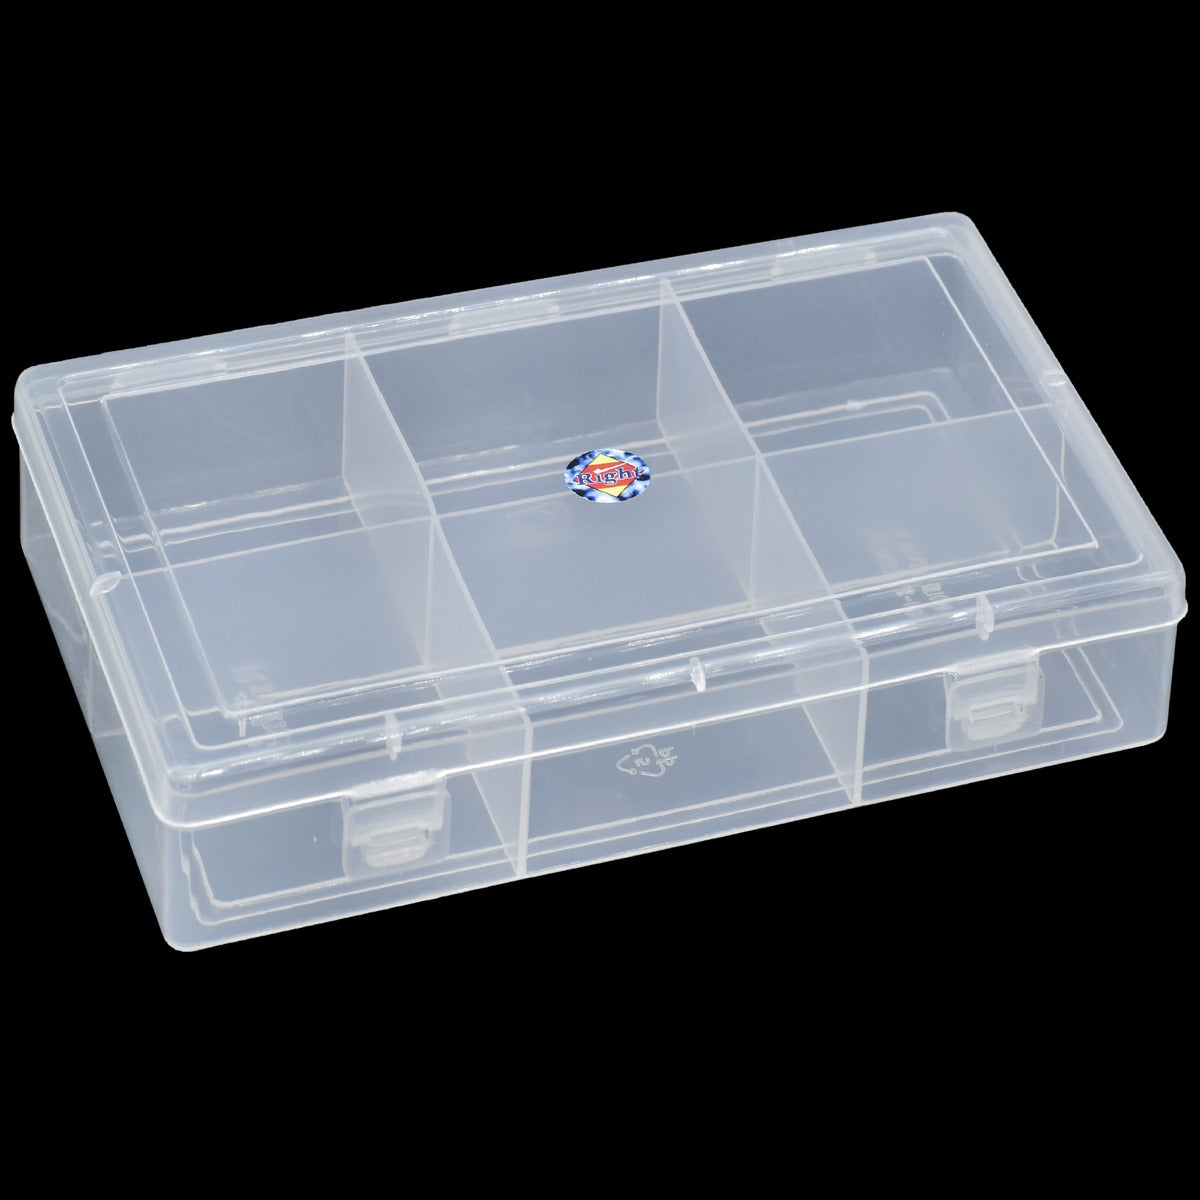 jags-mumbai Wooden & Plastic Box Transparent Plain Lockable Plastic Small Box organiser 19 x 12 cm